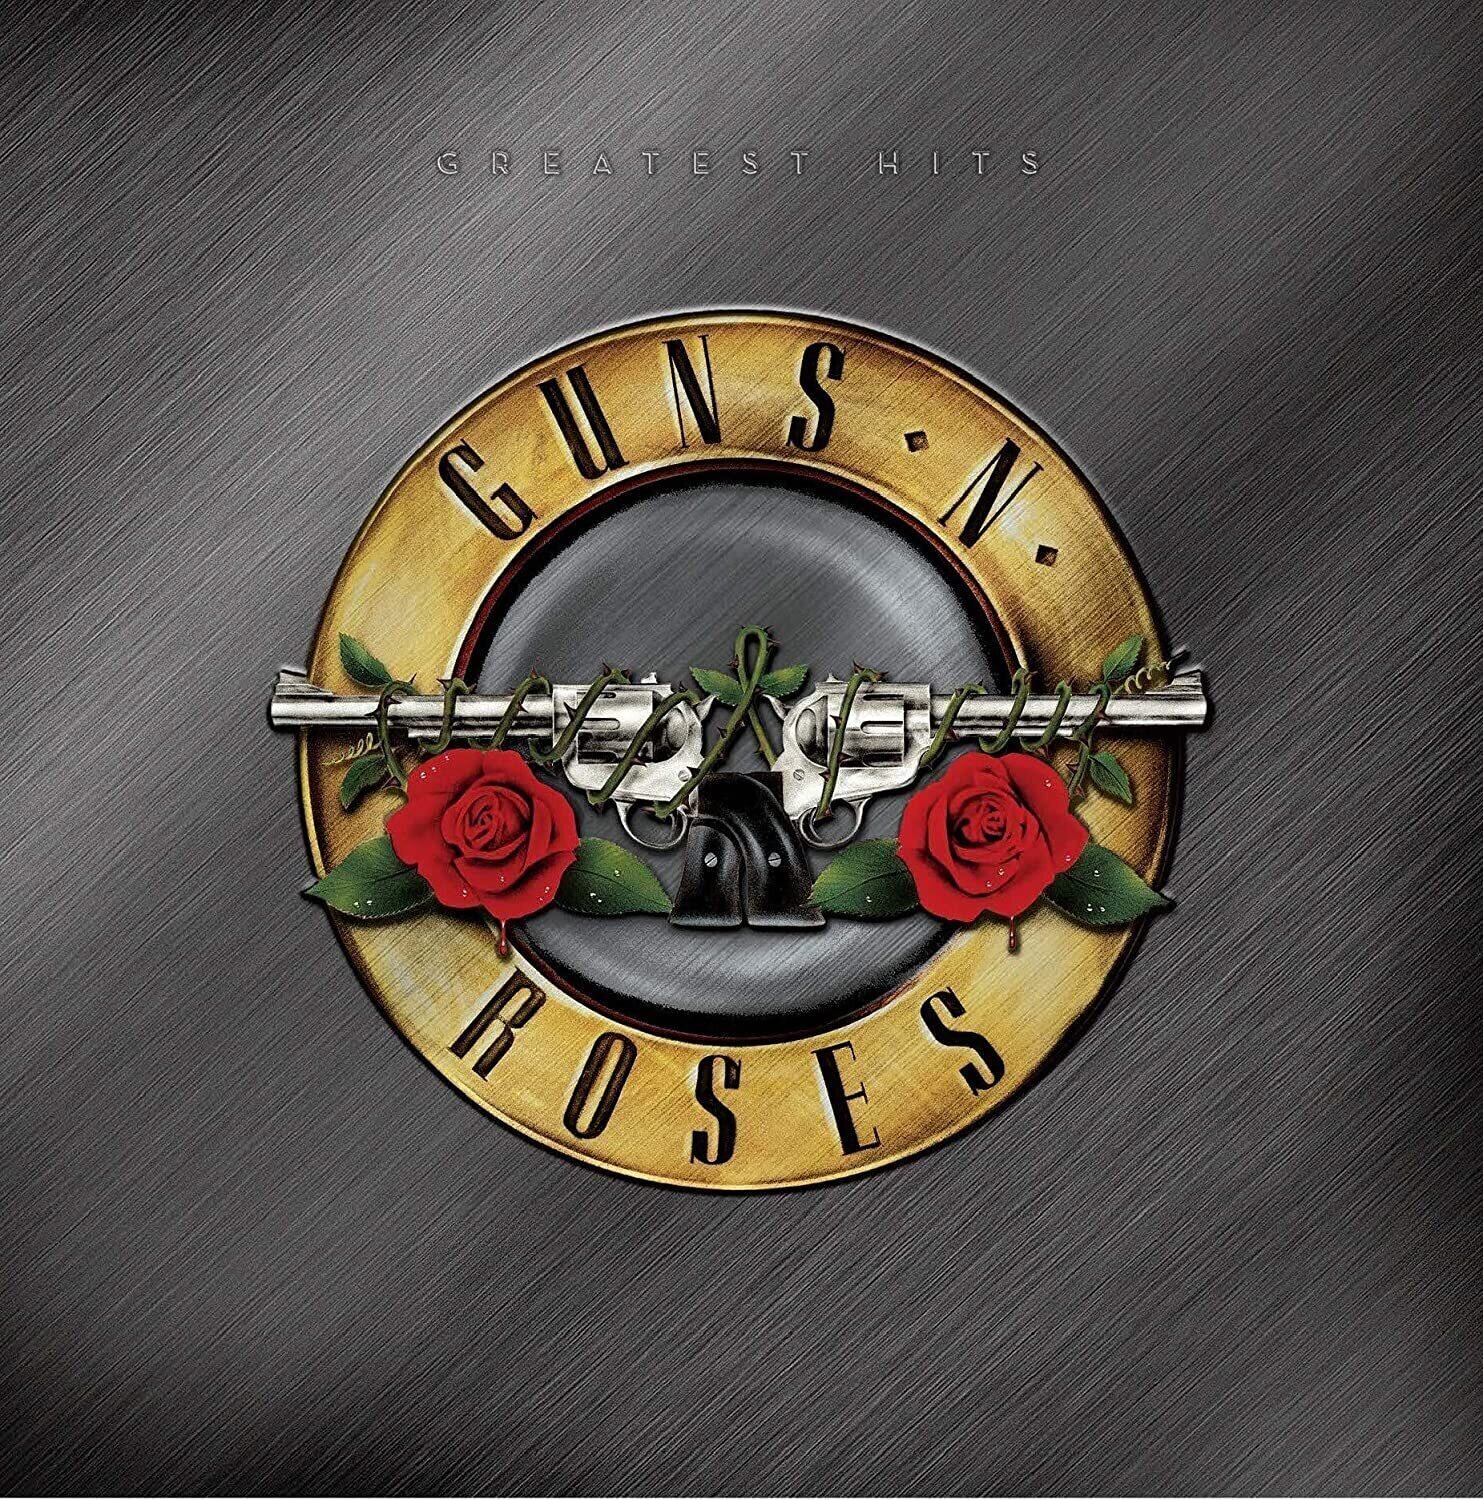 Vinylplade Guns N' Roses - Greatest Hits (2 LP) (Coloured) (180g)